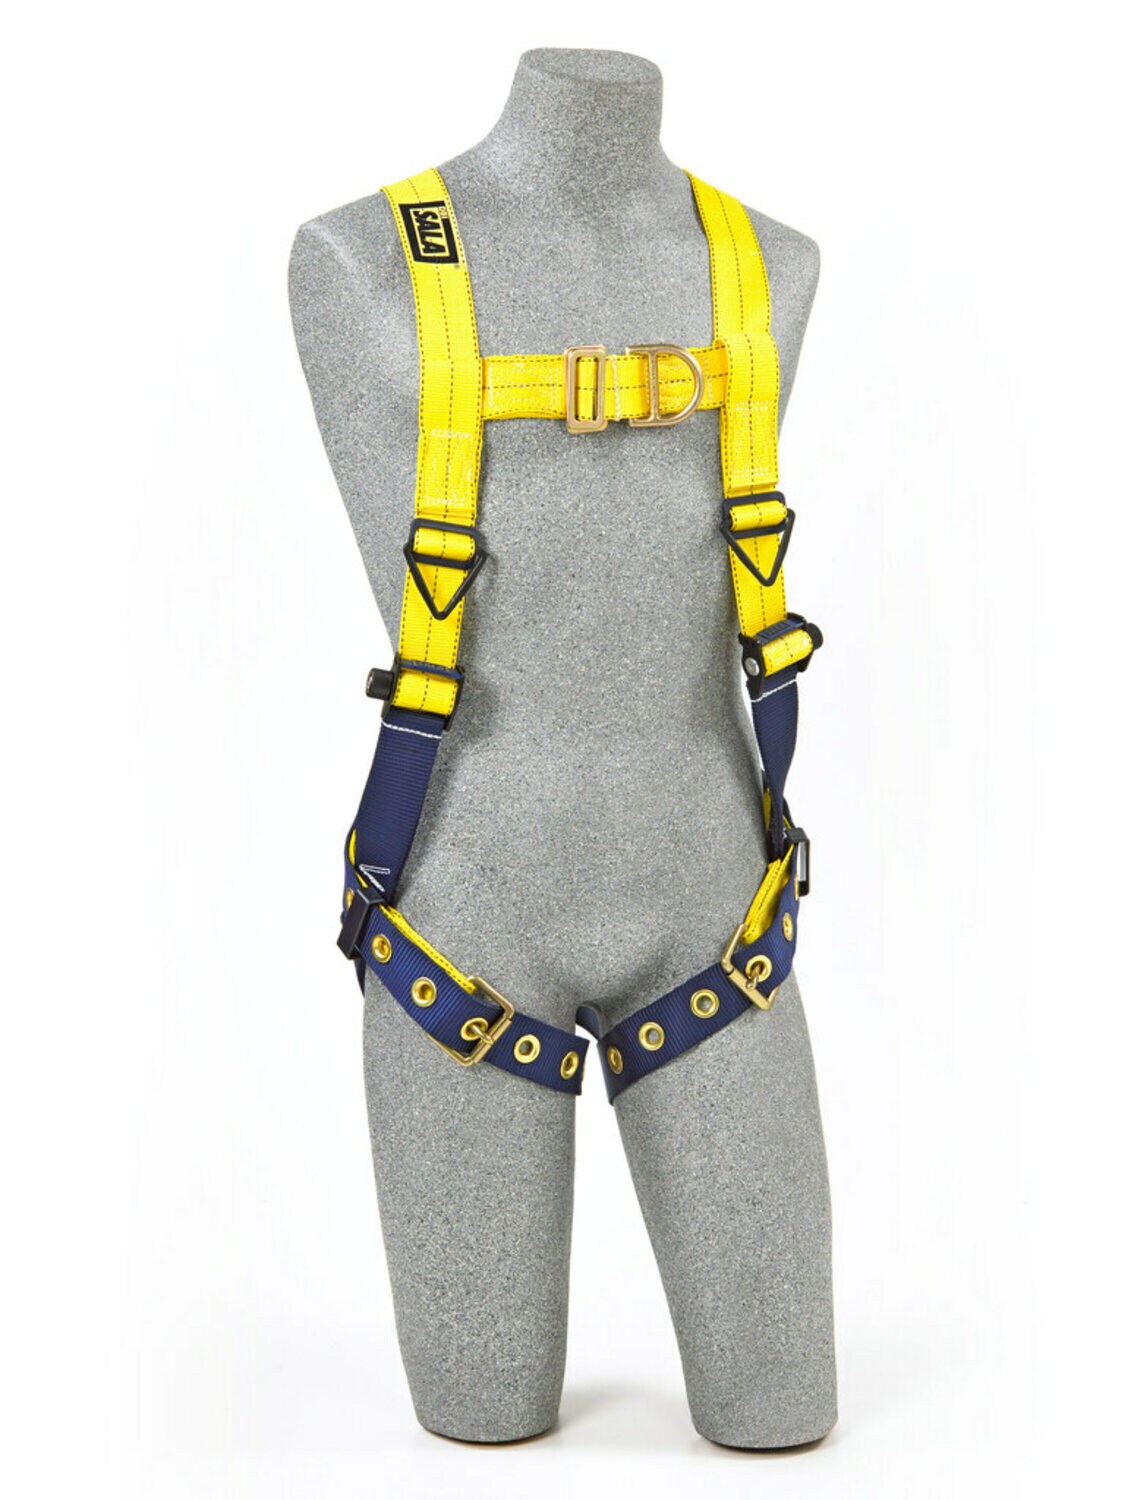 7012151396 - 3M DBI-SALA Delta Vest Climbing Safety Harness 1107803, X-Large